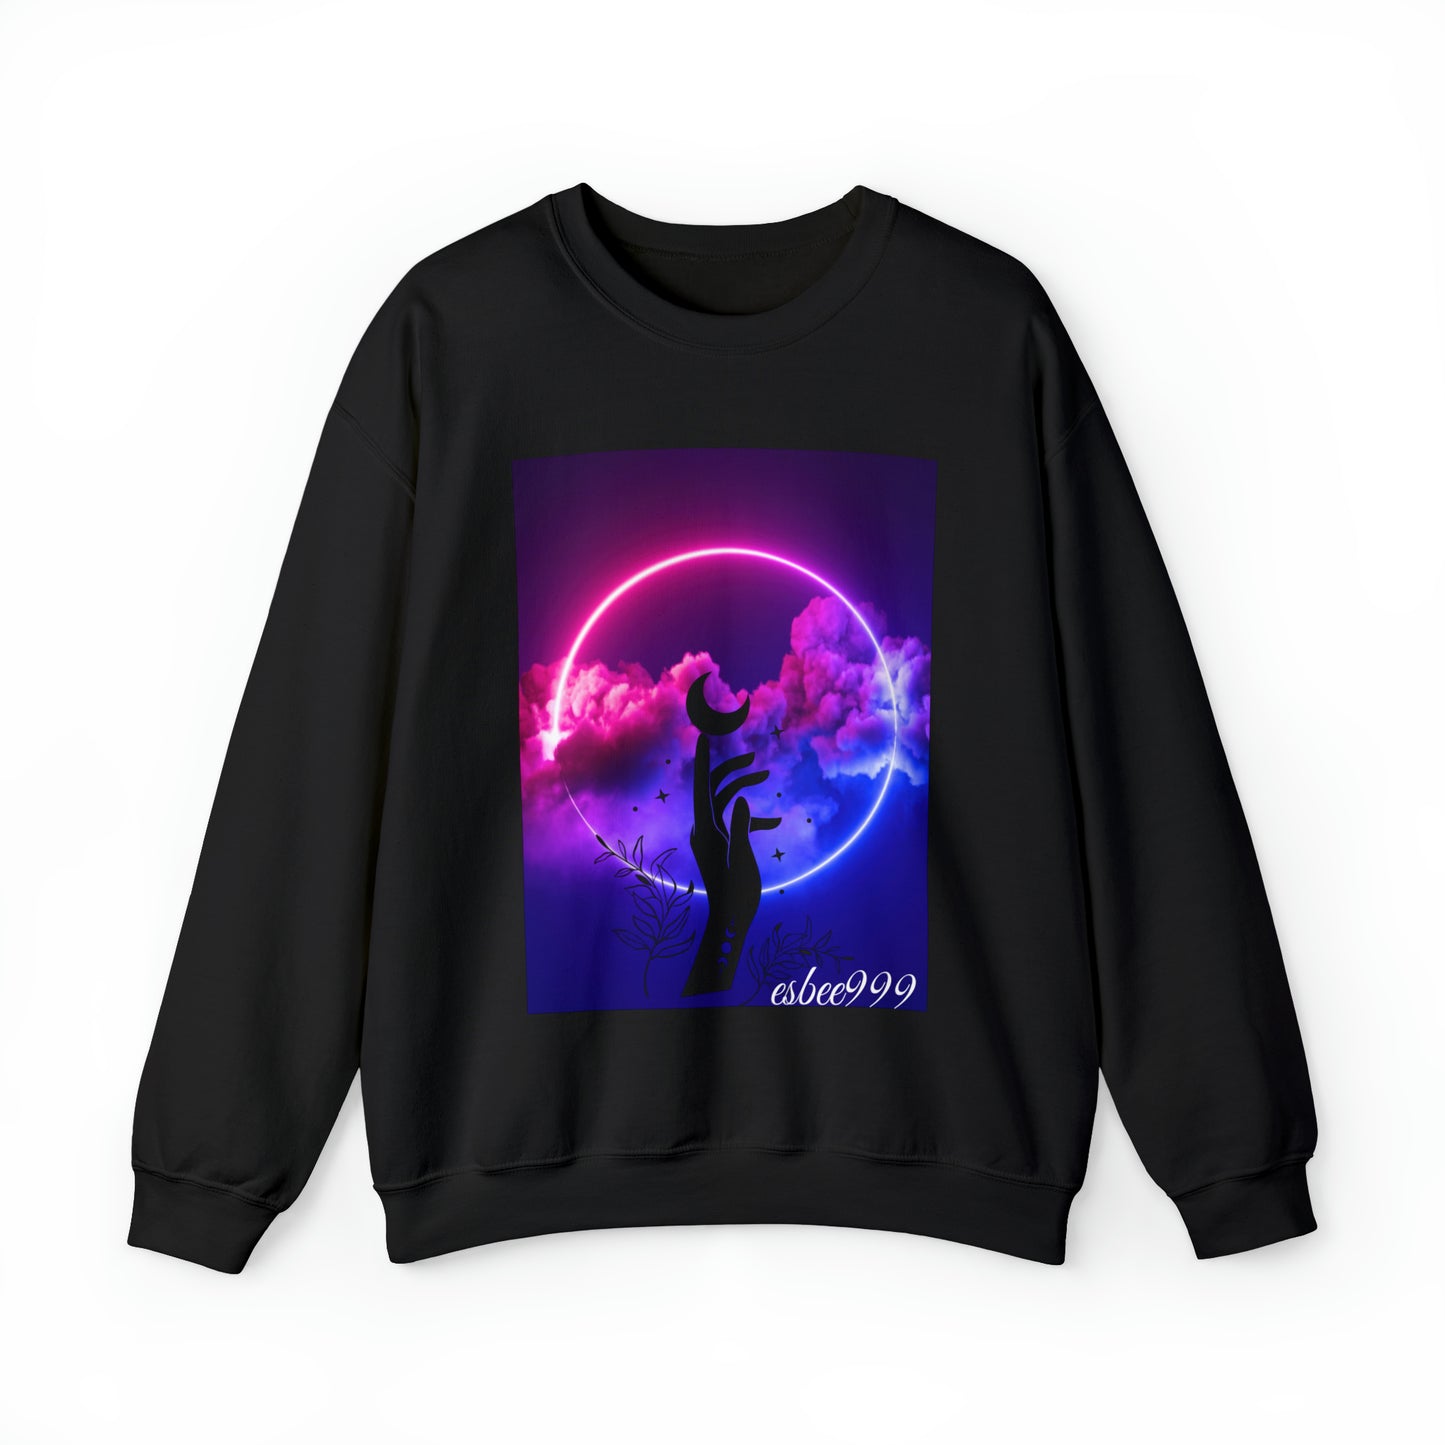 Moon and Clouds Crewneck Sweatshirt, Cute Celestial Witchy Sweatshirt Aesthetic